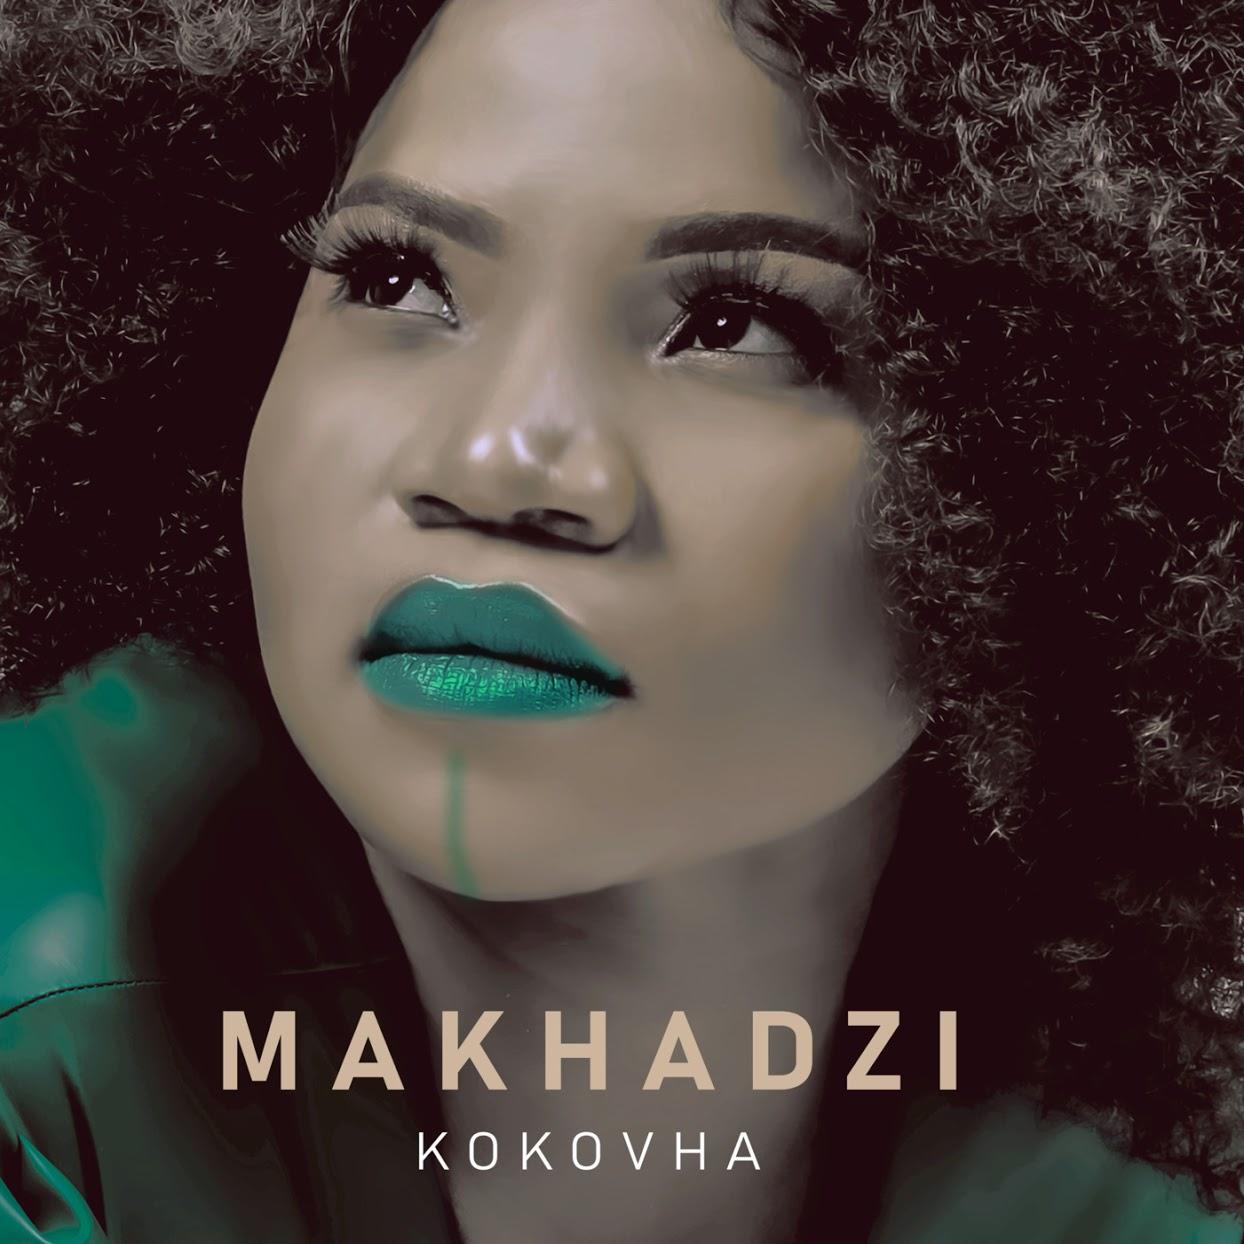 DOWNLOAD MP3: Makhadzi - Sugar Sugar (feat. Mampintsha ...